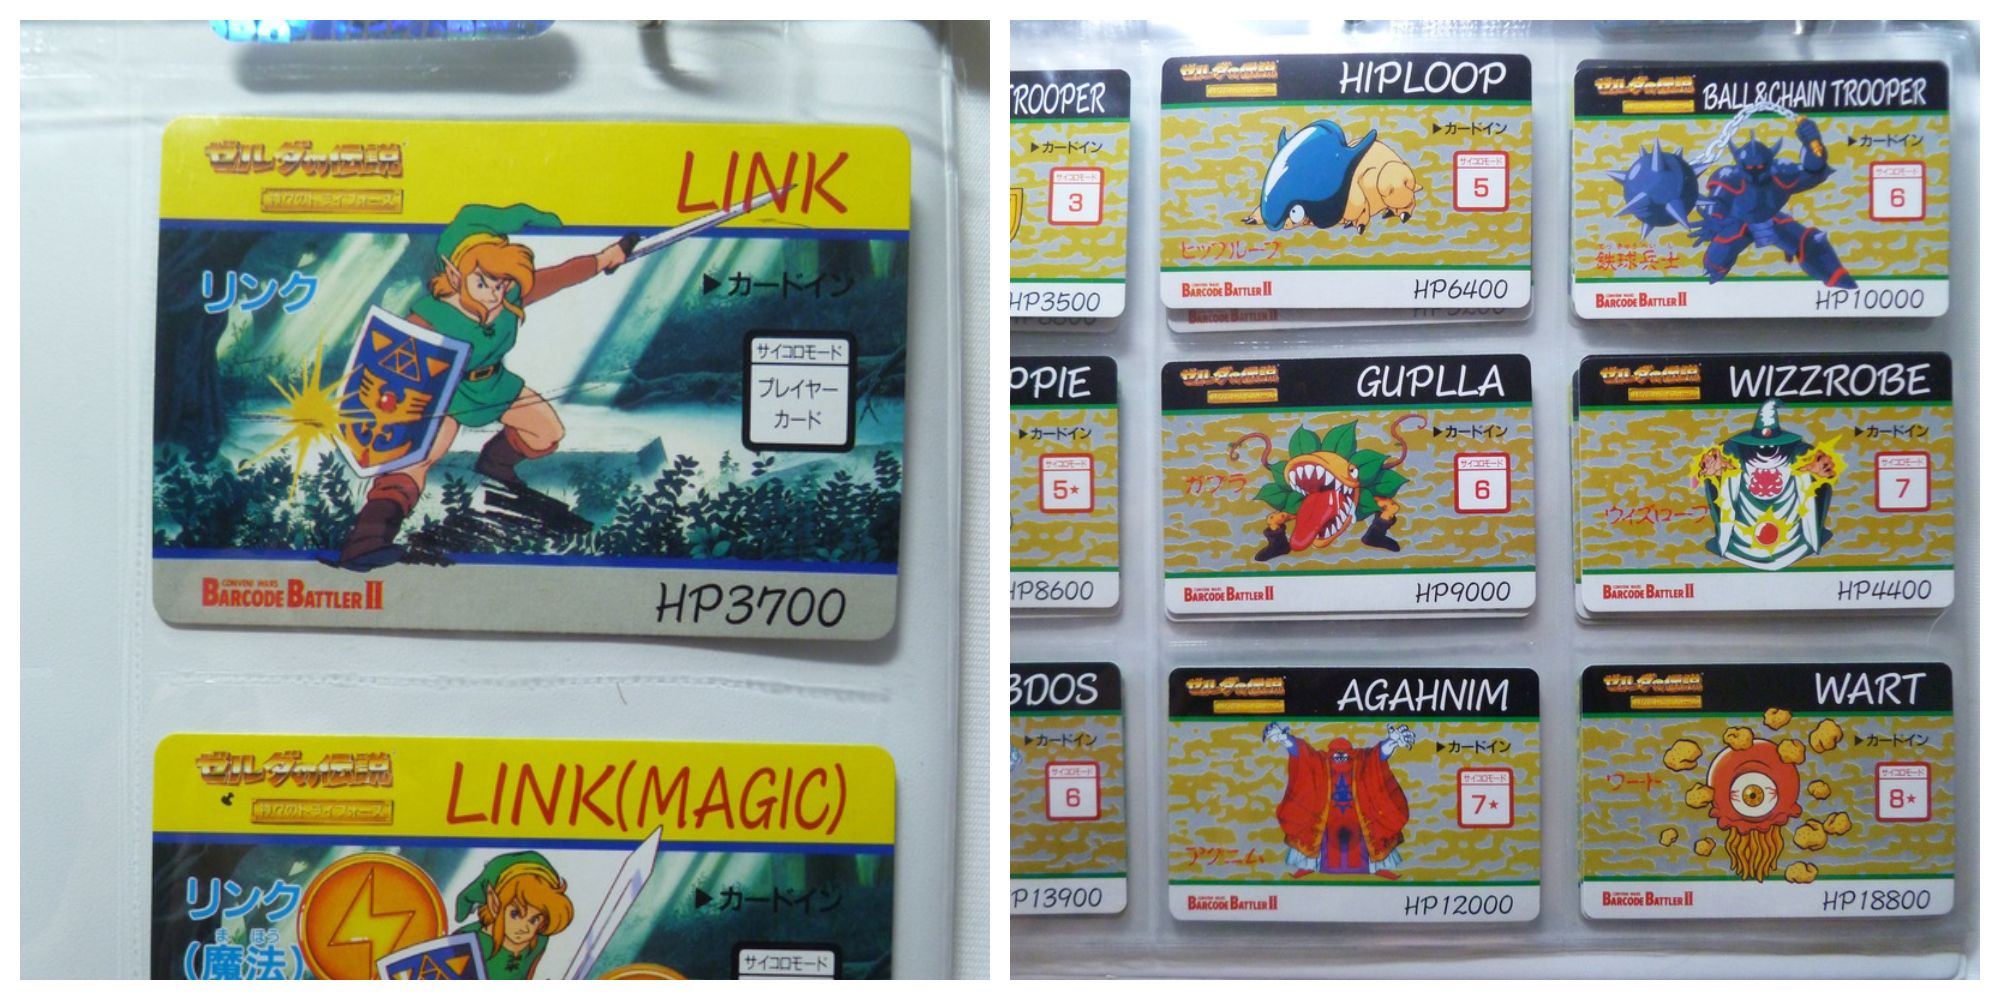 Zeldas Strange BS Zelda Game barcode Battler